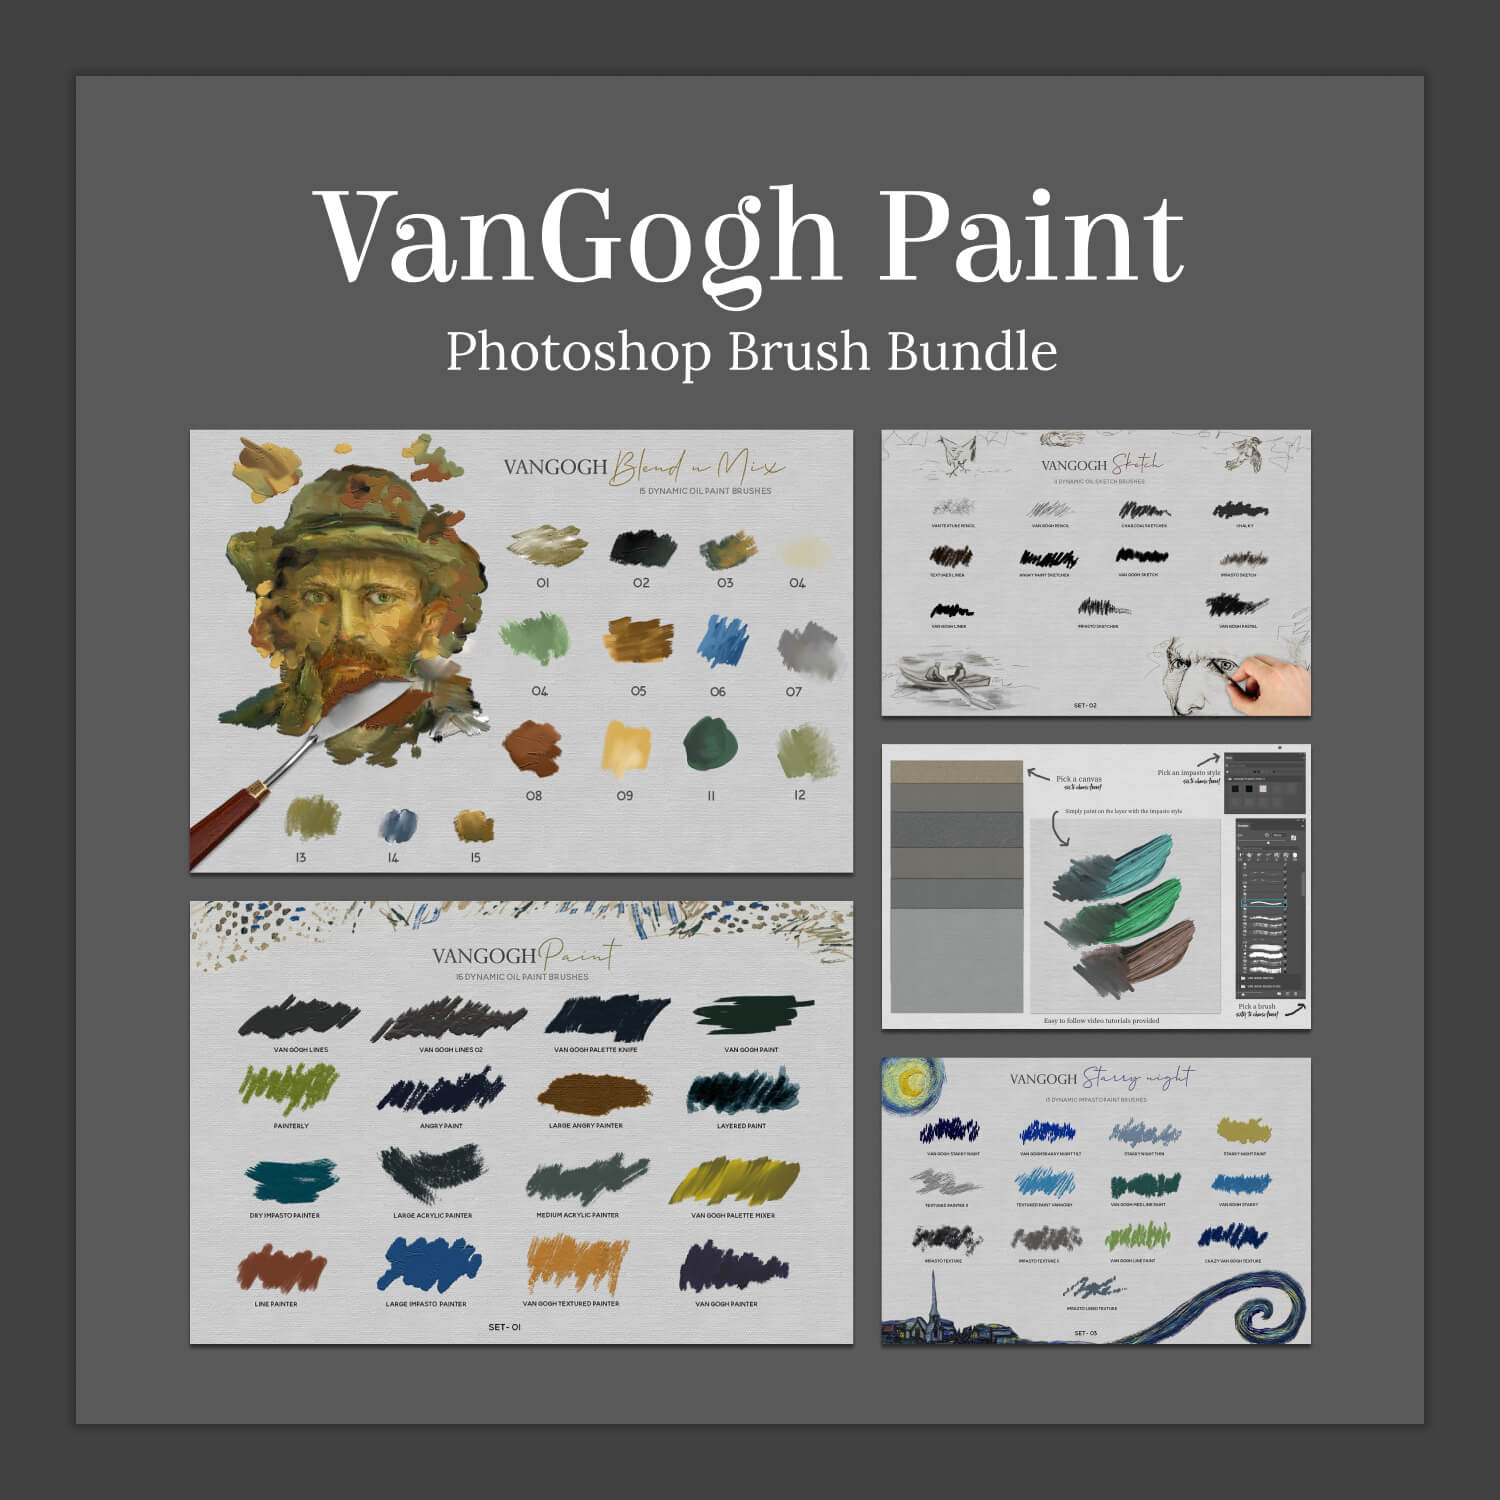 VanGogh Paint, Photoshop Brush Bundle.